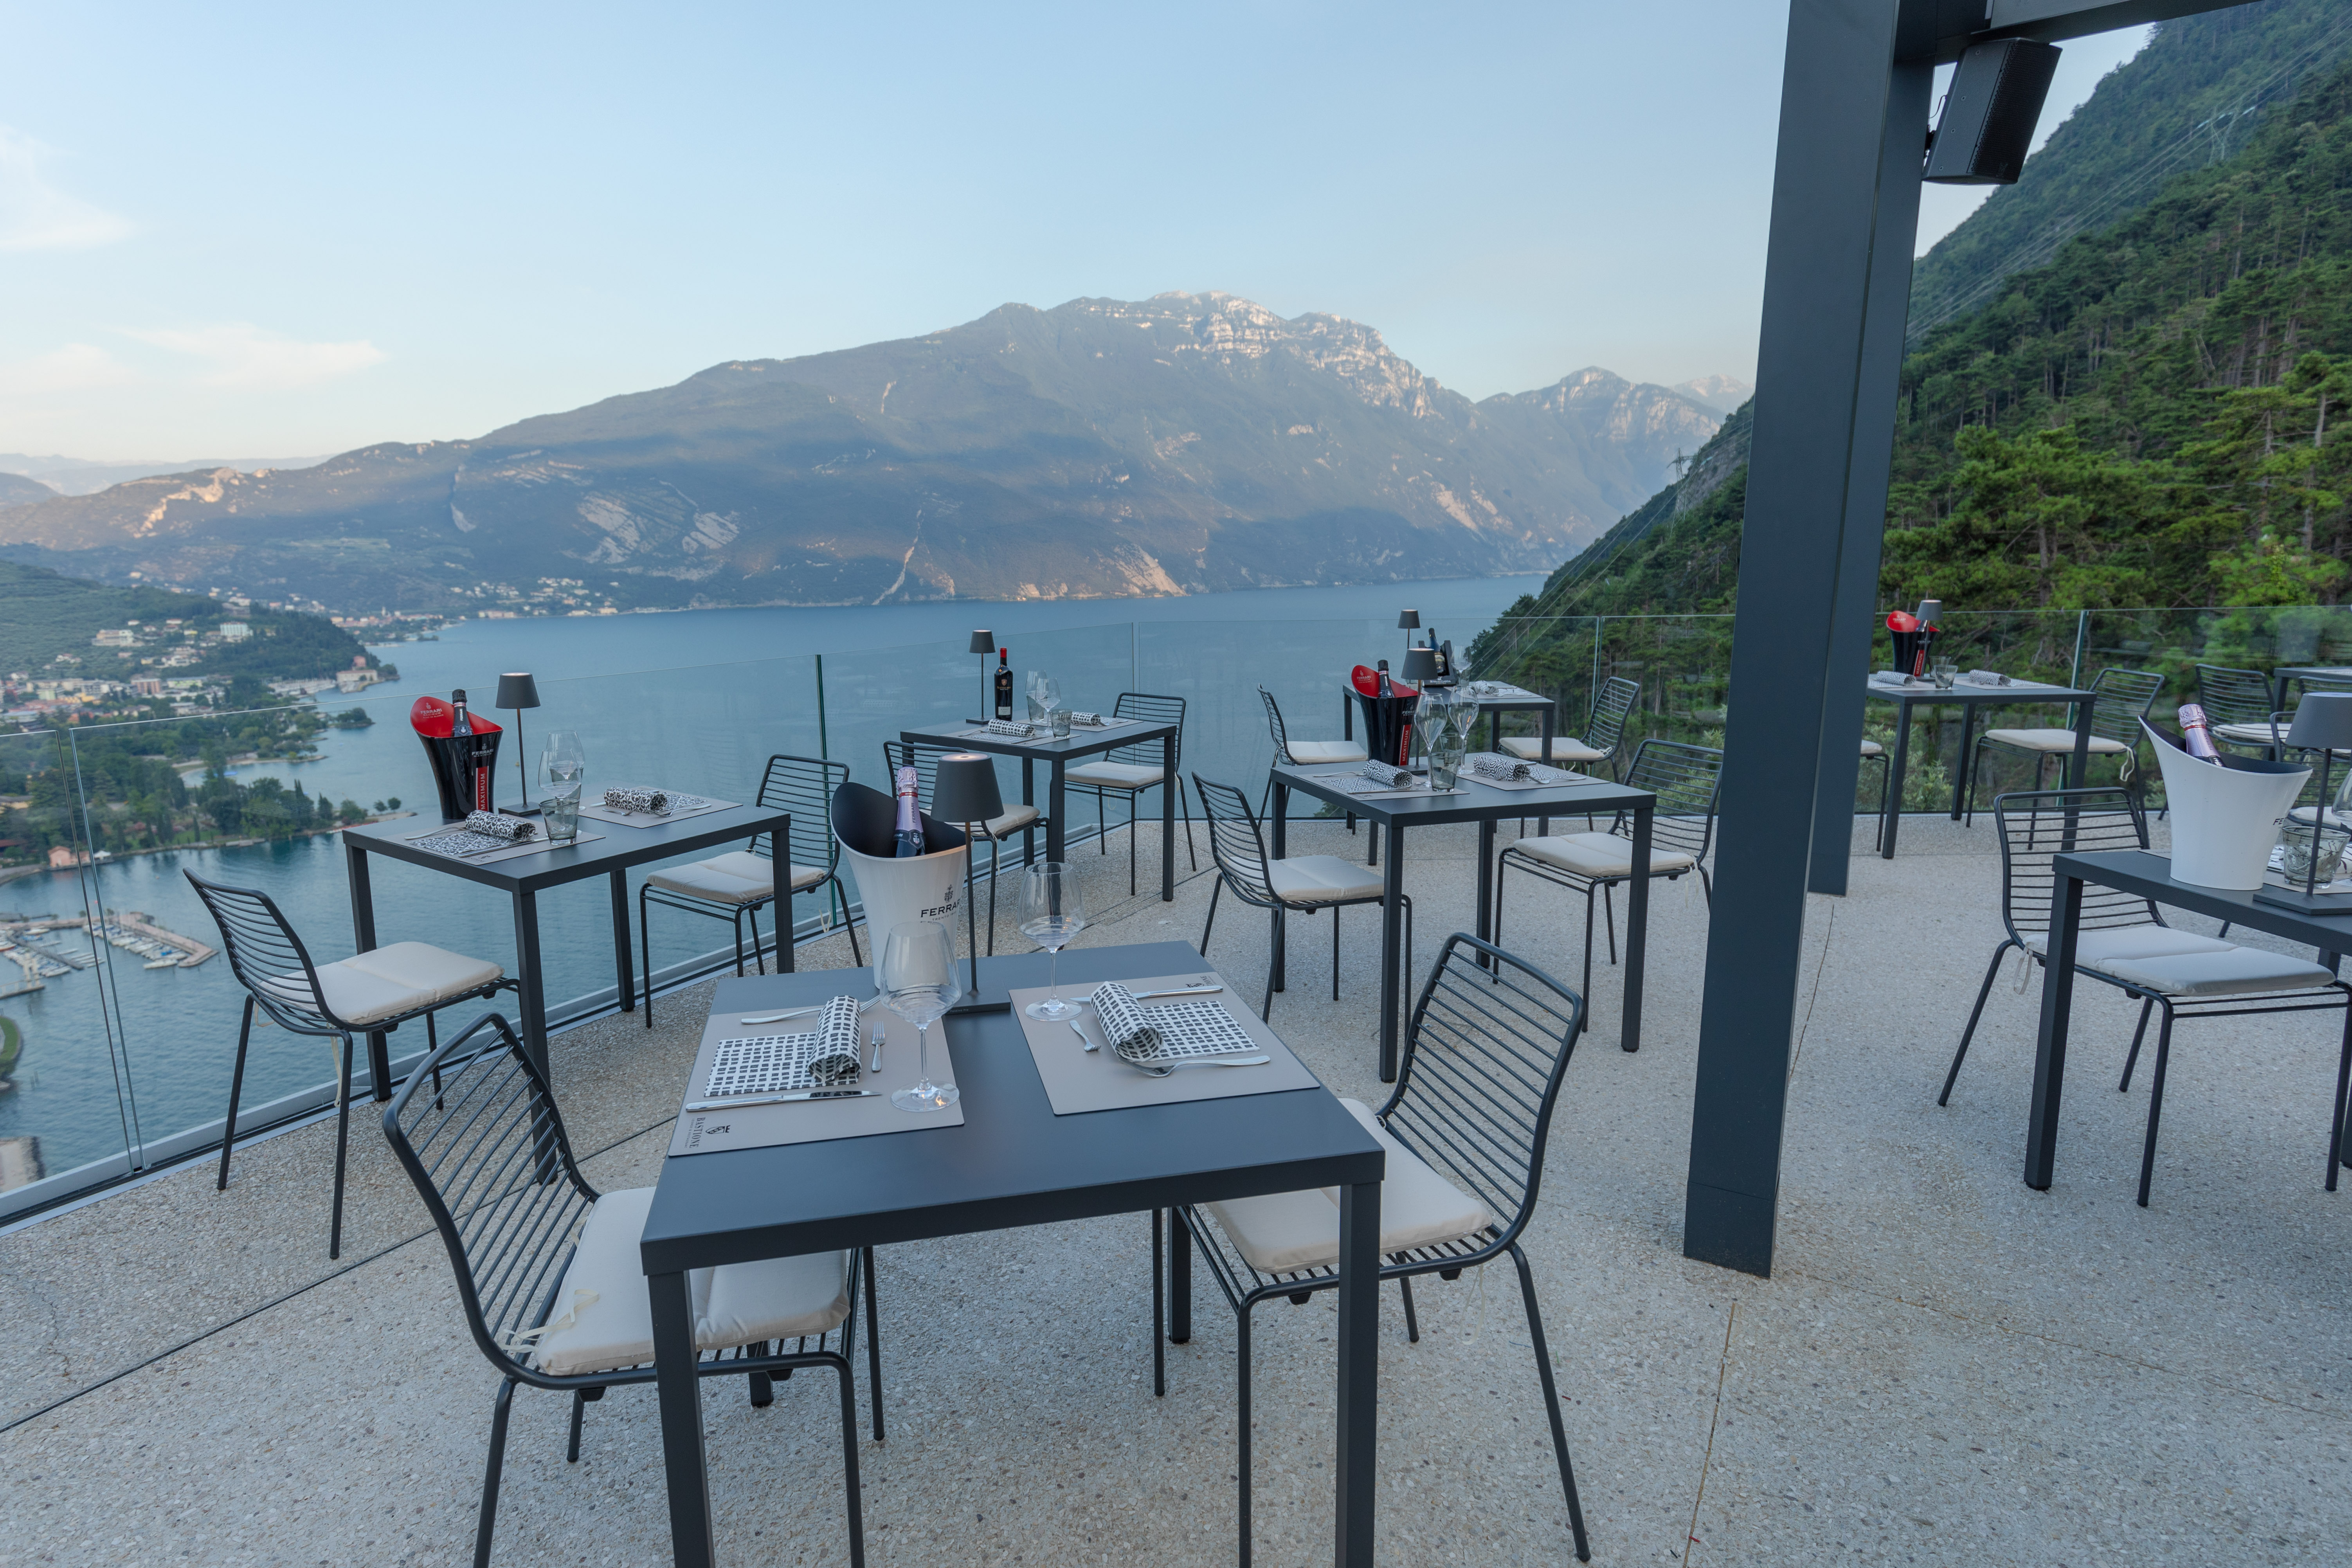 Panoramic Basitone at Lake Garda brought to life with Blackline X8